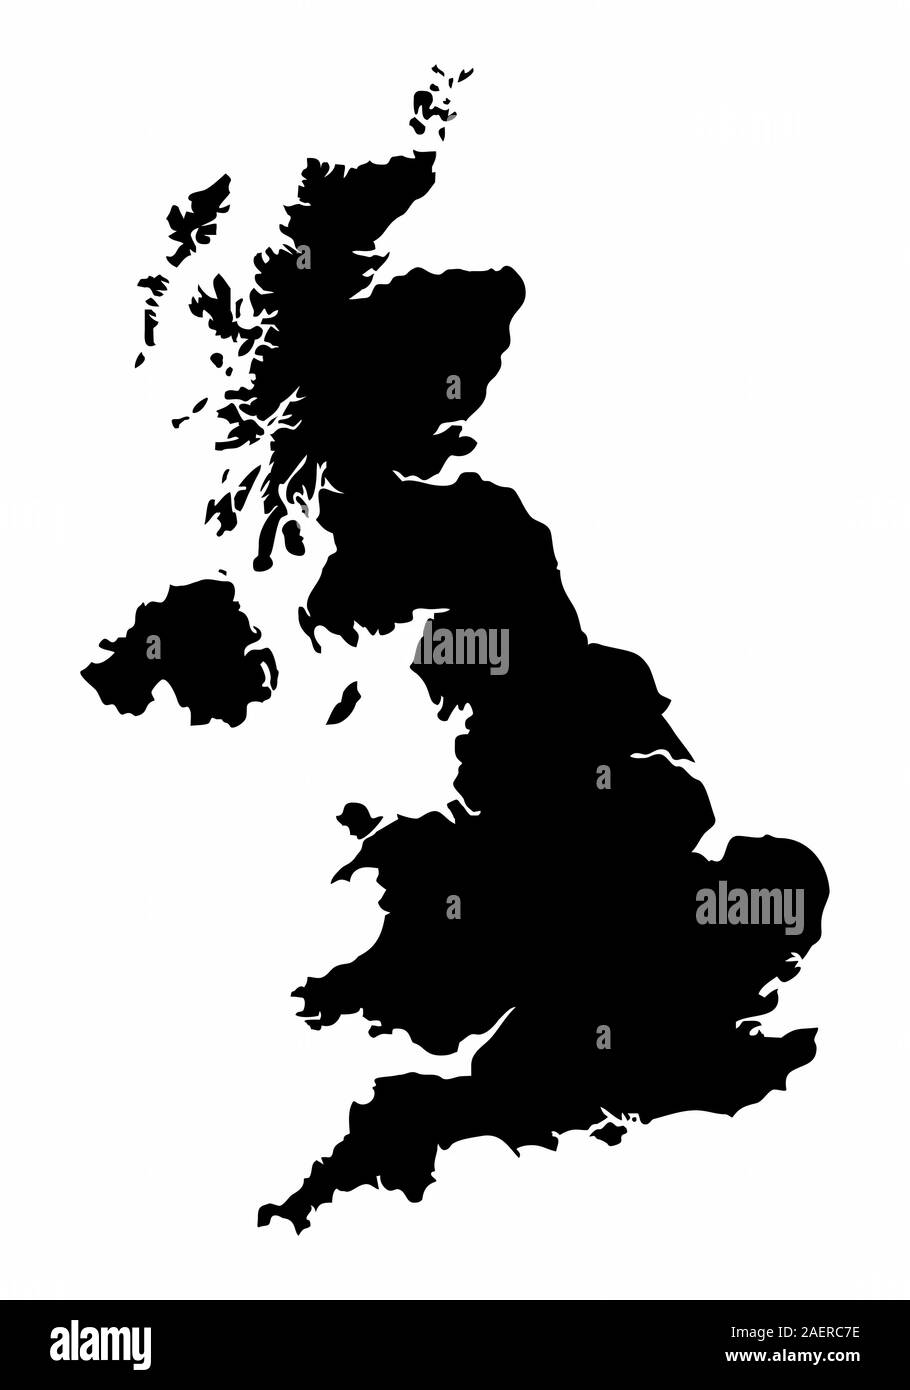 United Kingdom silhouette map Stock Vector